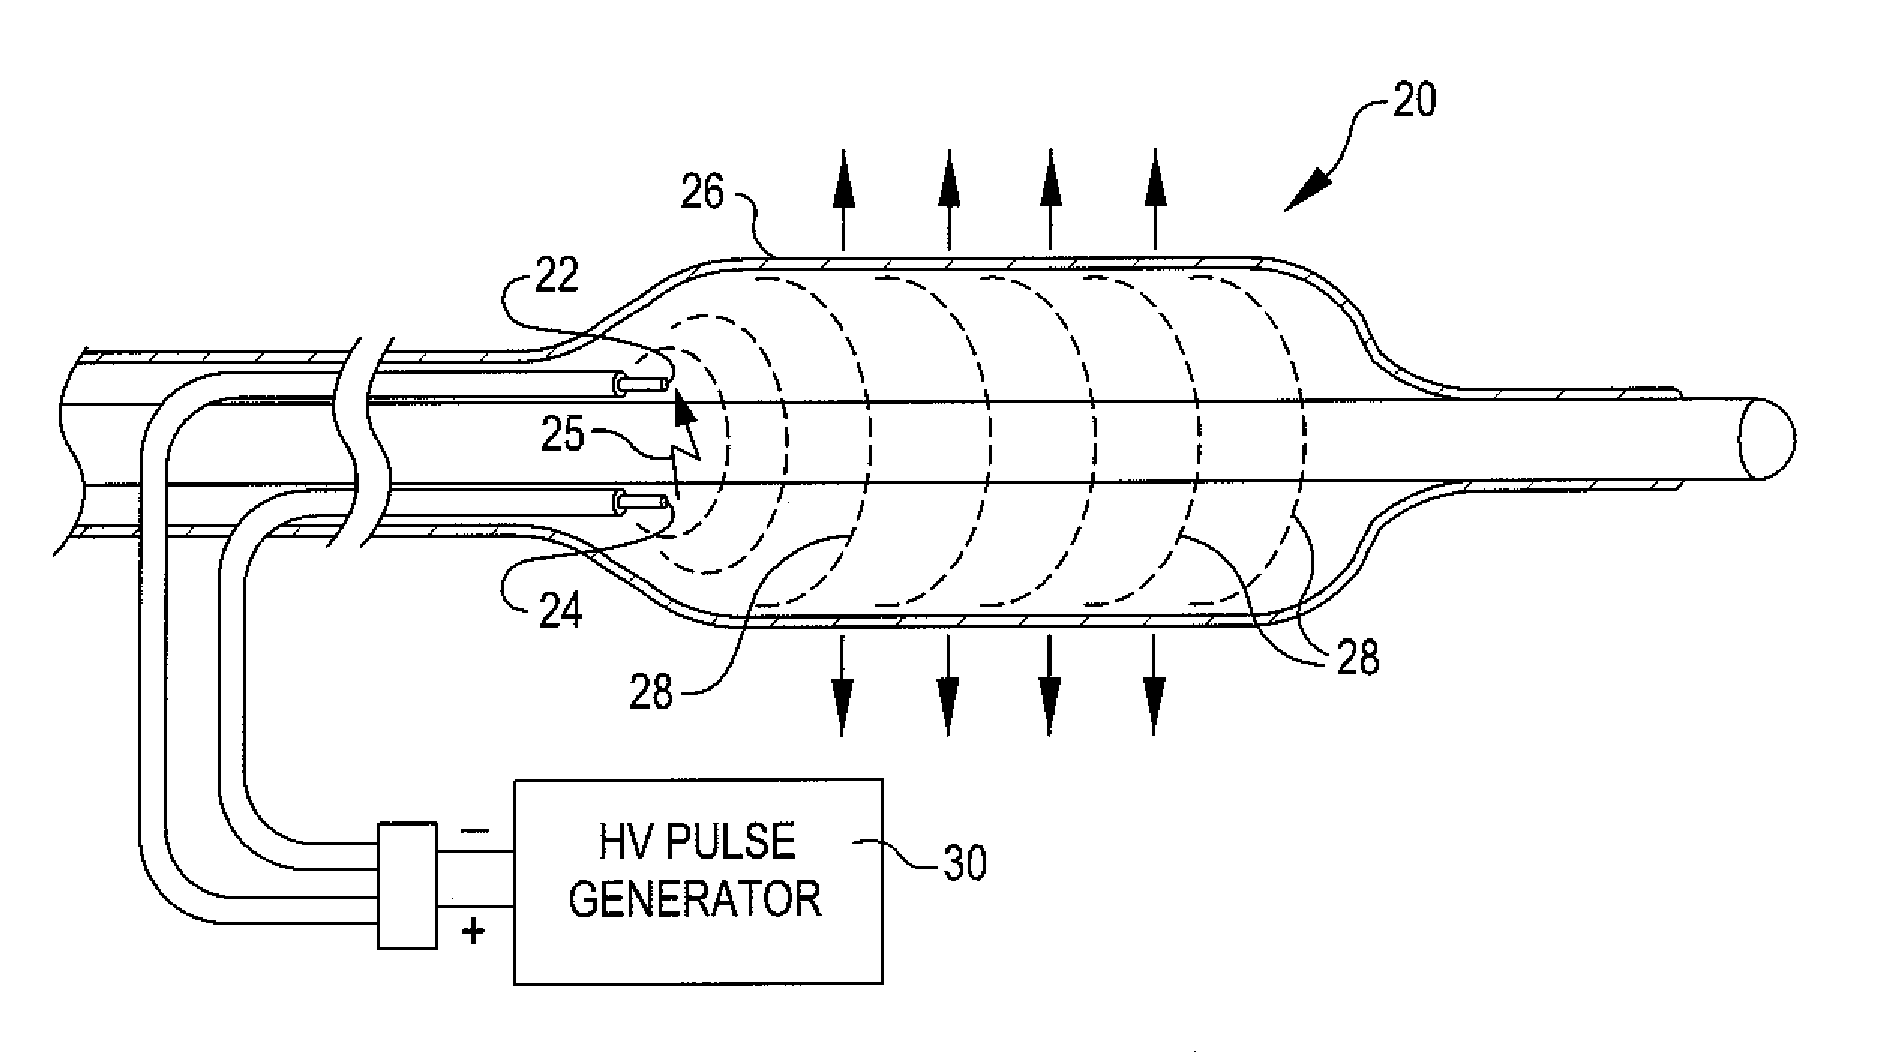 Drug delivery shockwave balloon catheter system